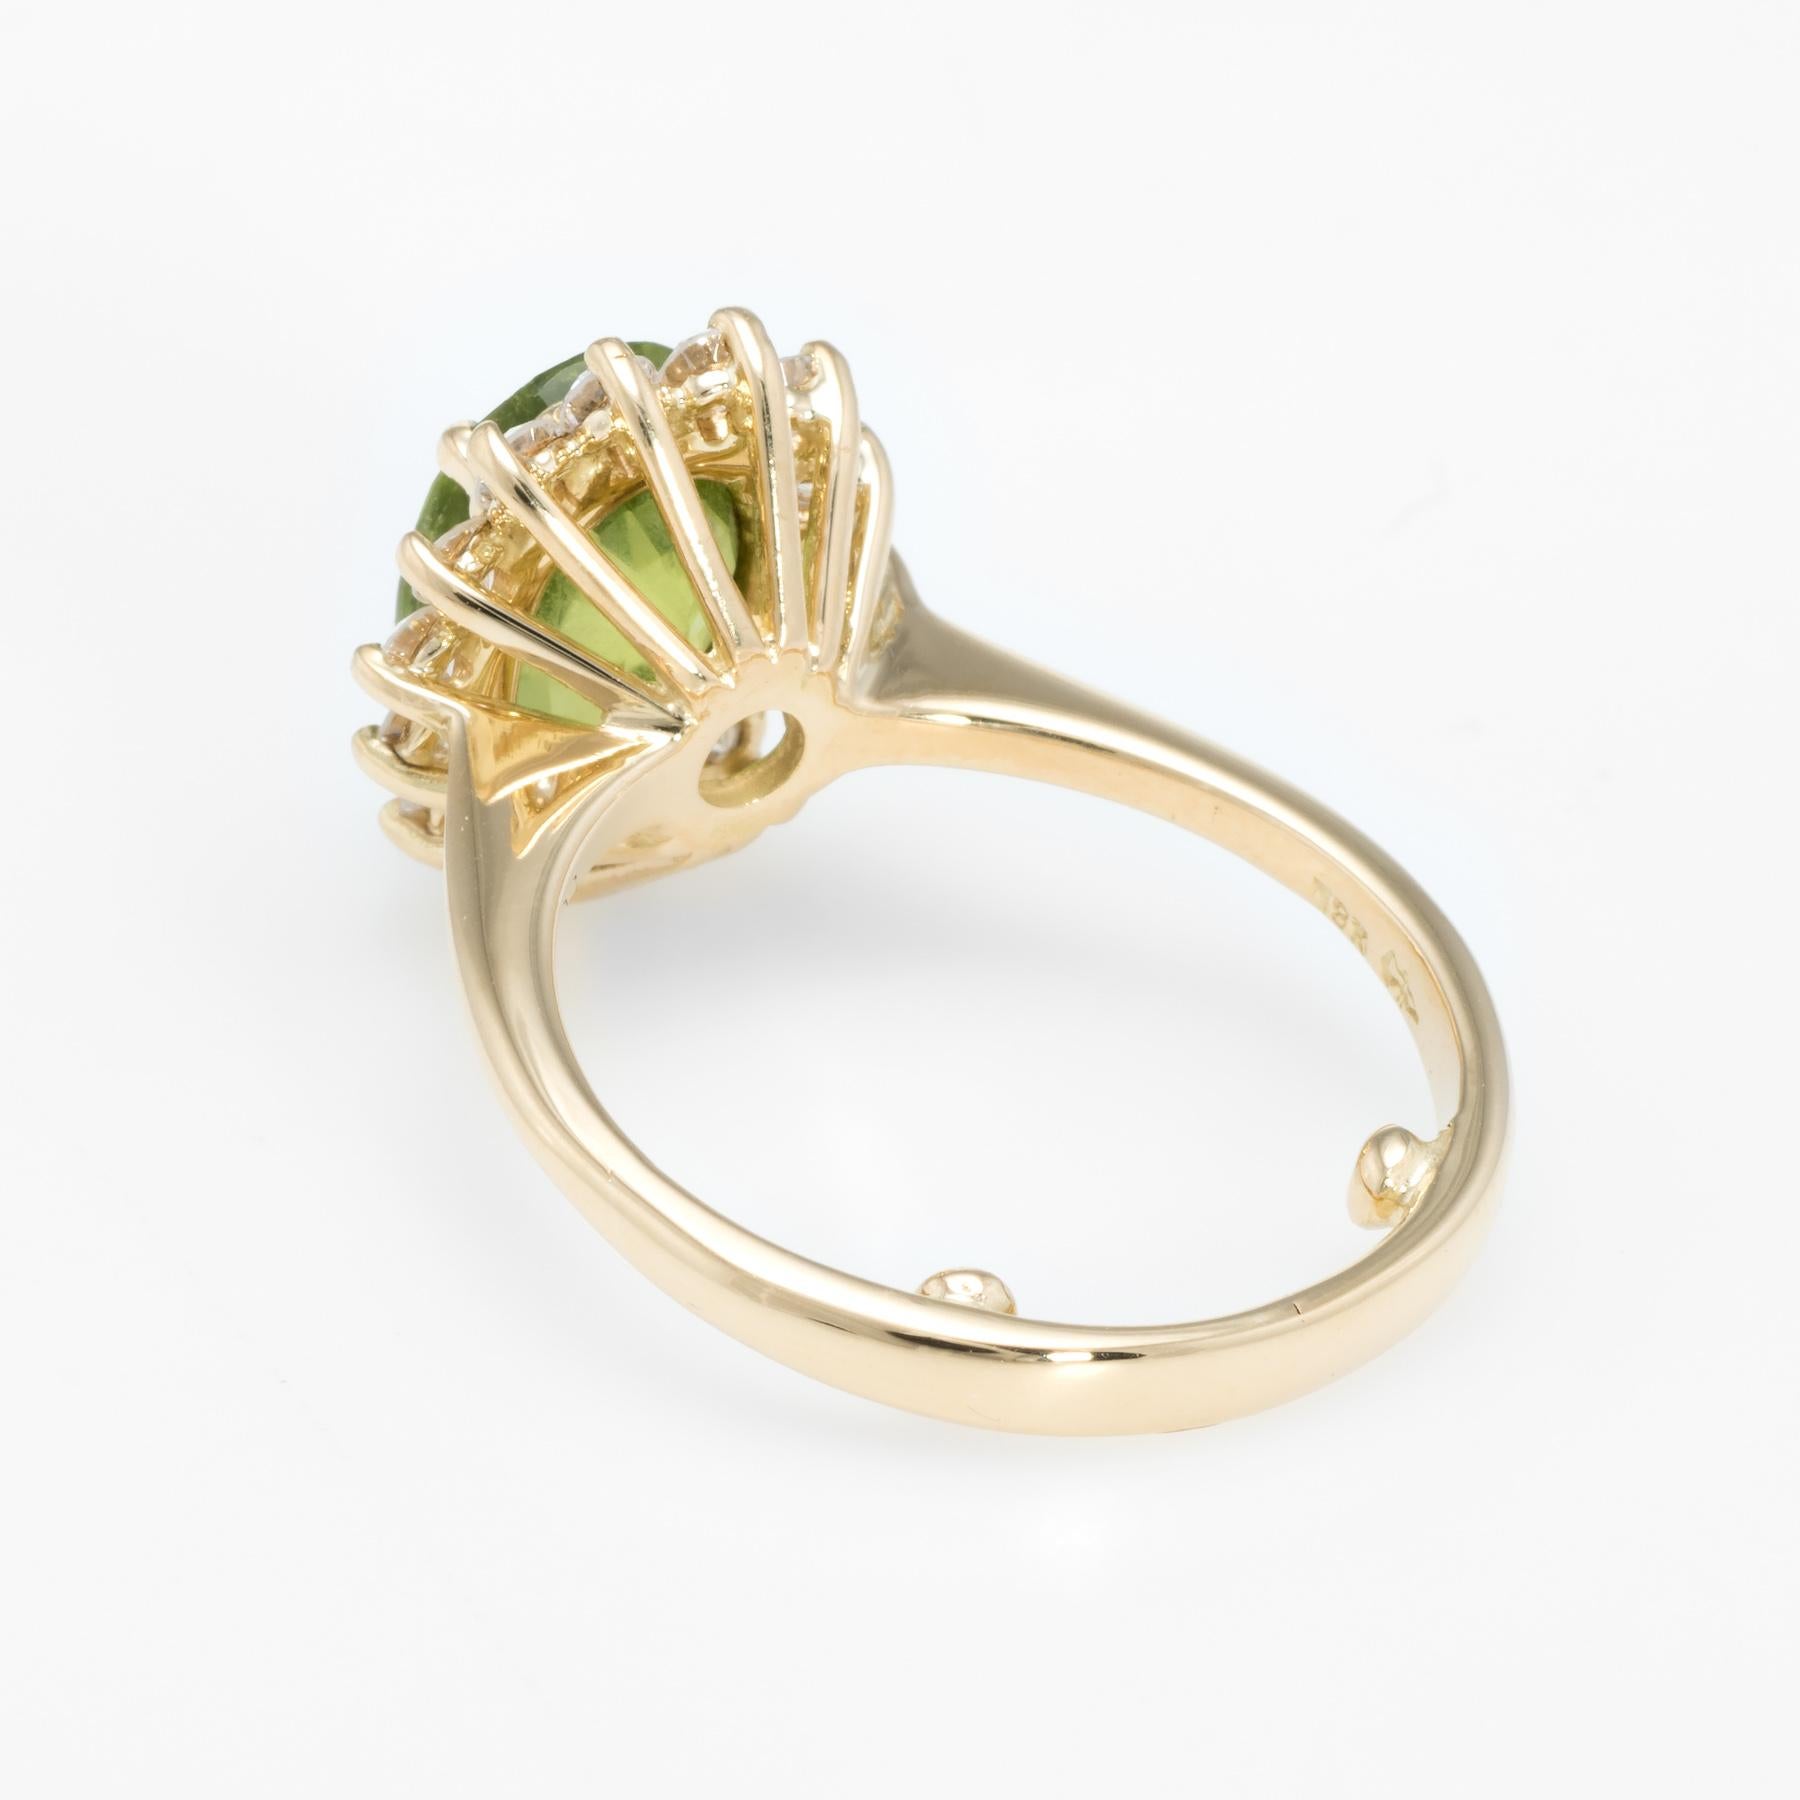 Oval Cut Peridot Diamond Princess Cocktail Ring Vintage 18 Karat Gold Estate Jewelry